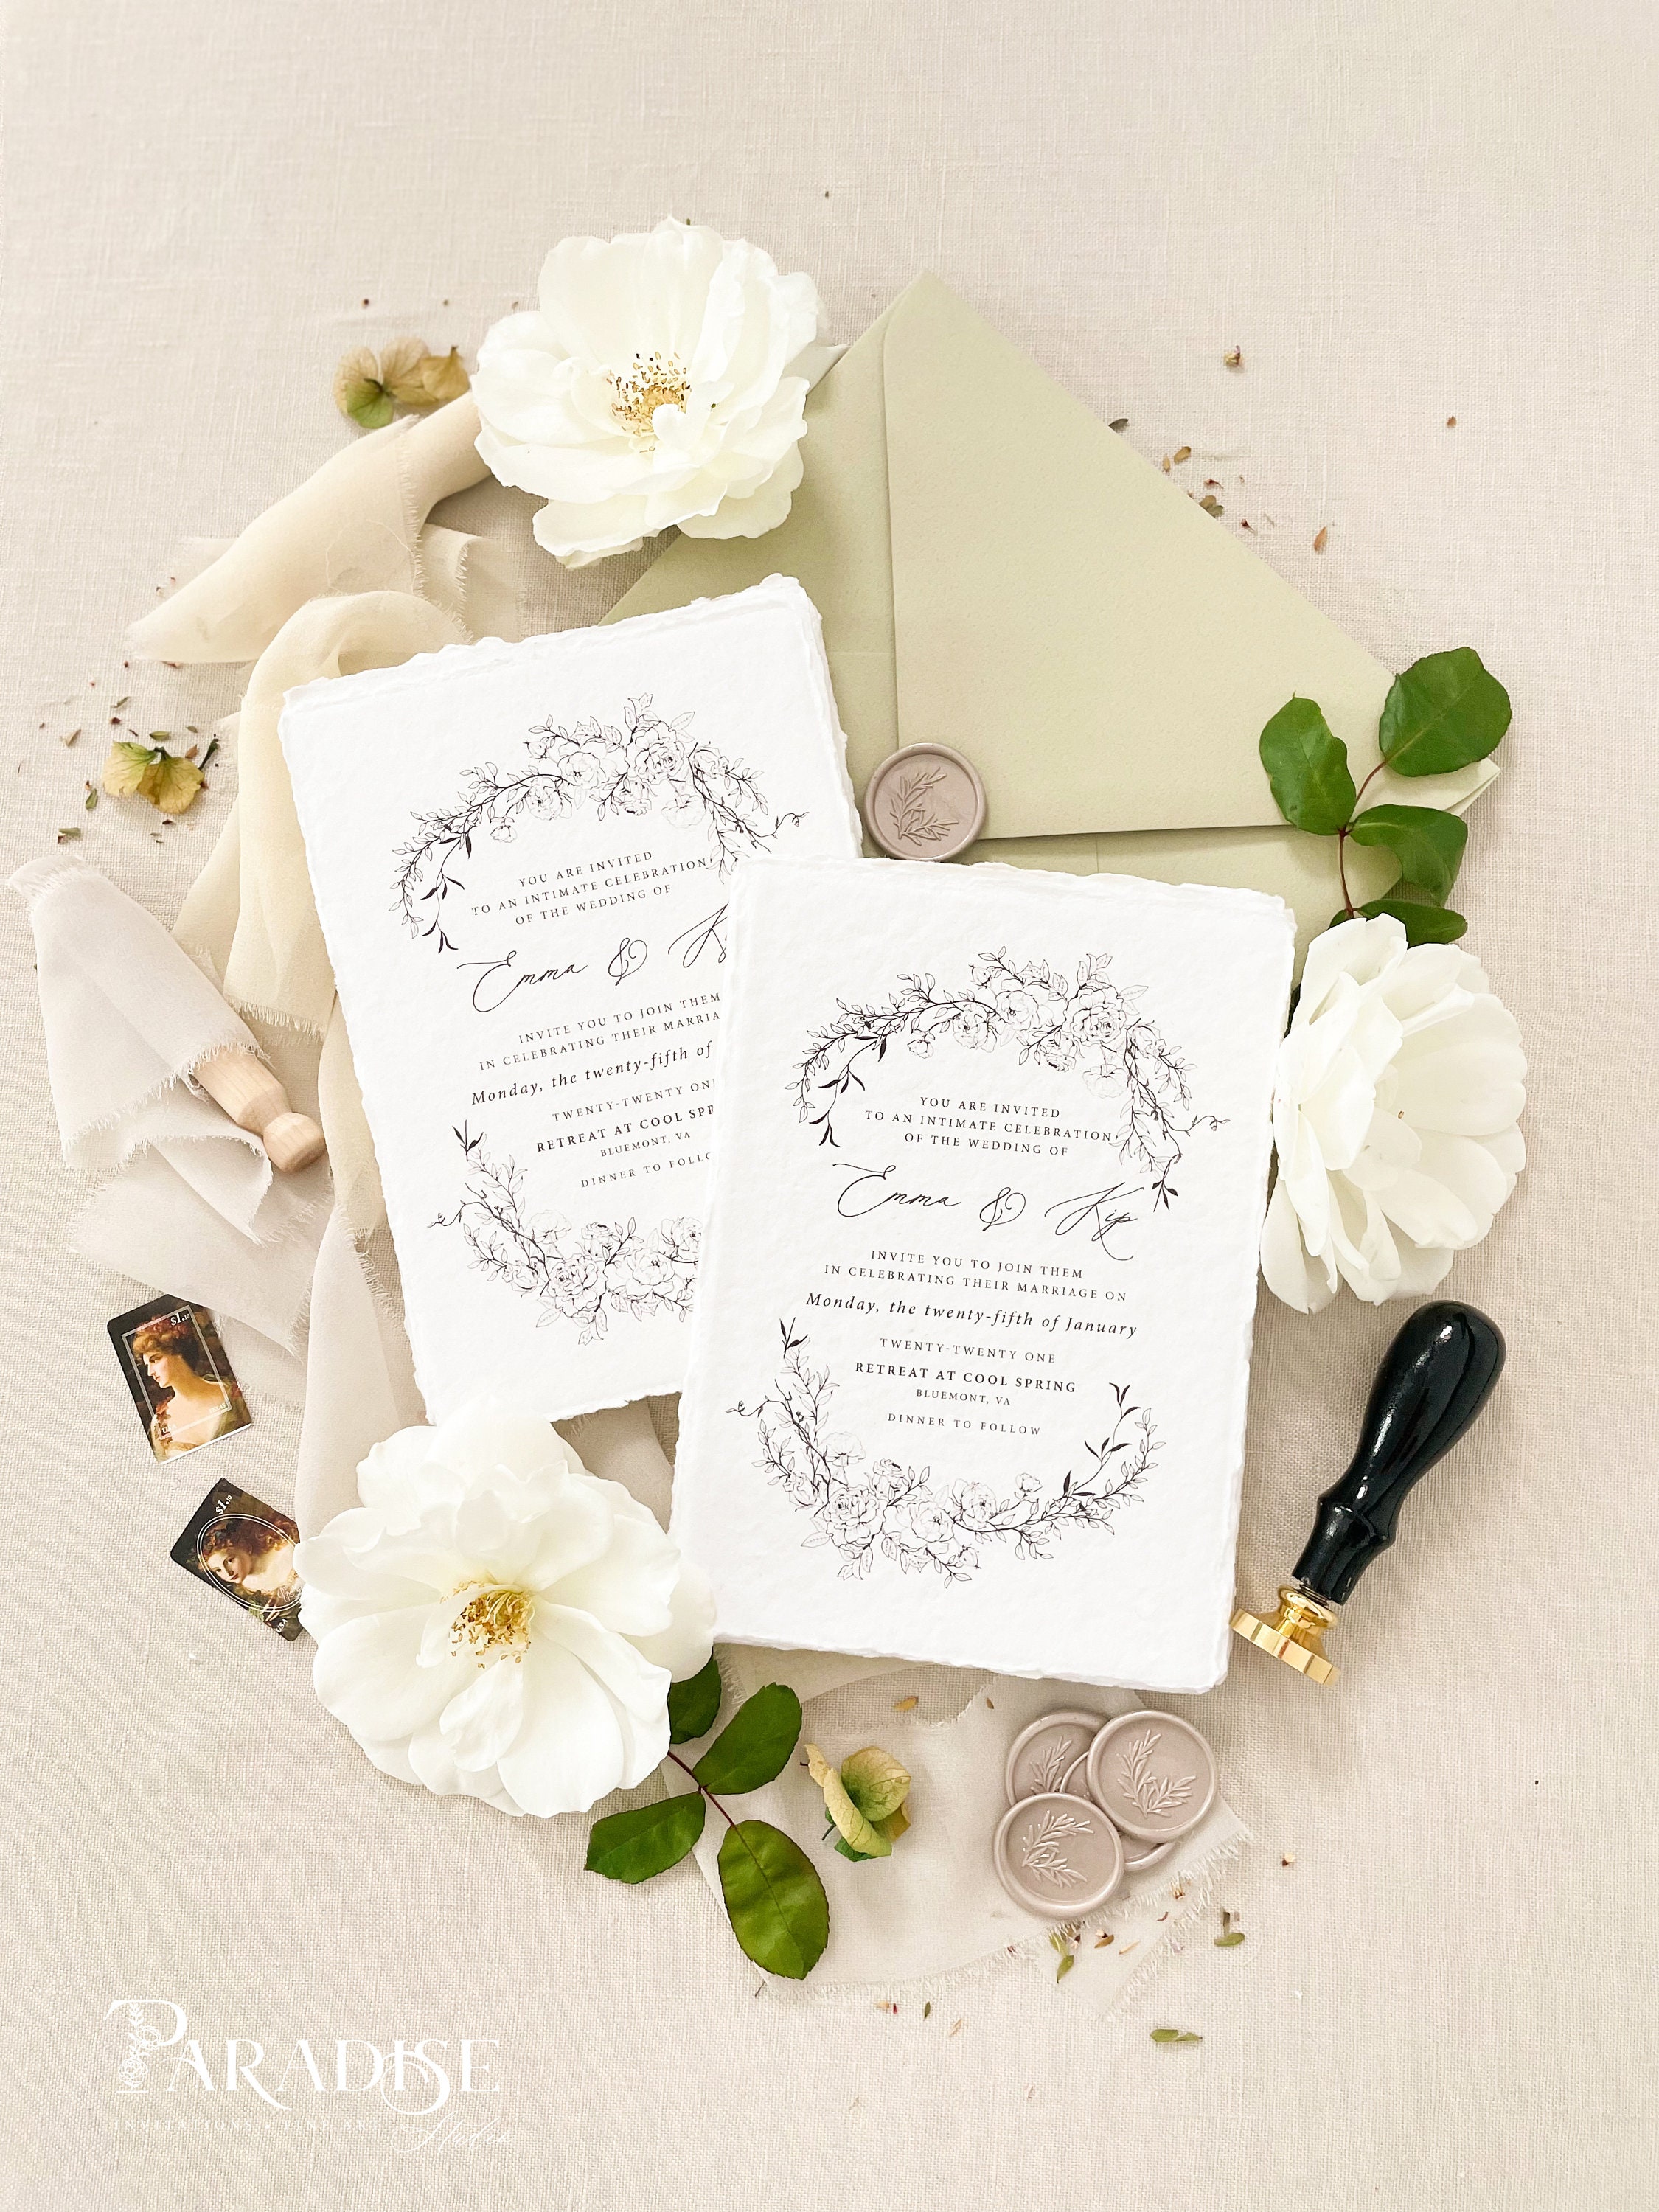 Kaylee Deckled Edge Paper Wedding Invitation, Wedding Stationery, Printed  or Printable Invitations, Handmade Paper Invitations, DEPOSIT 